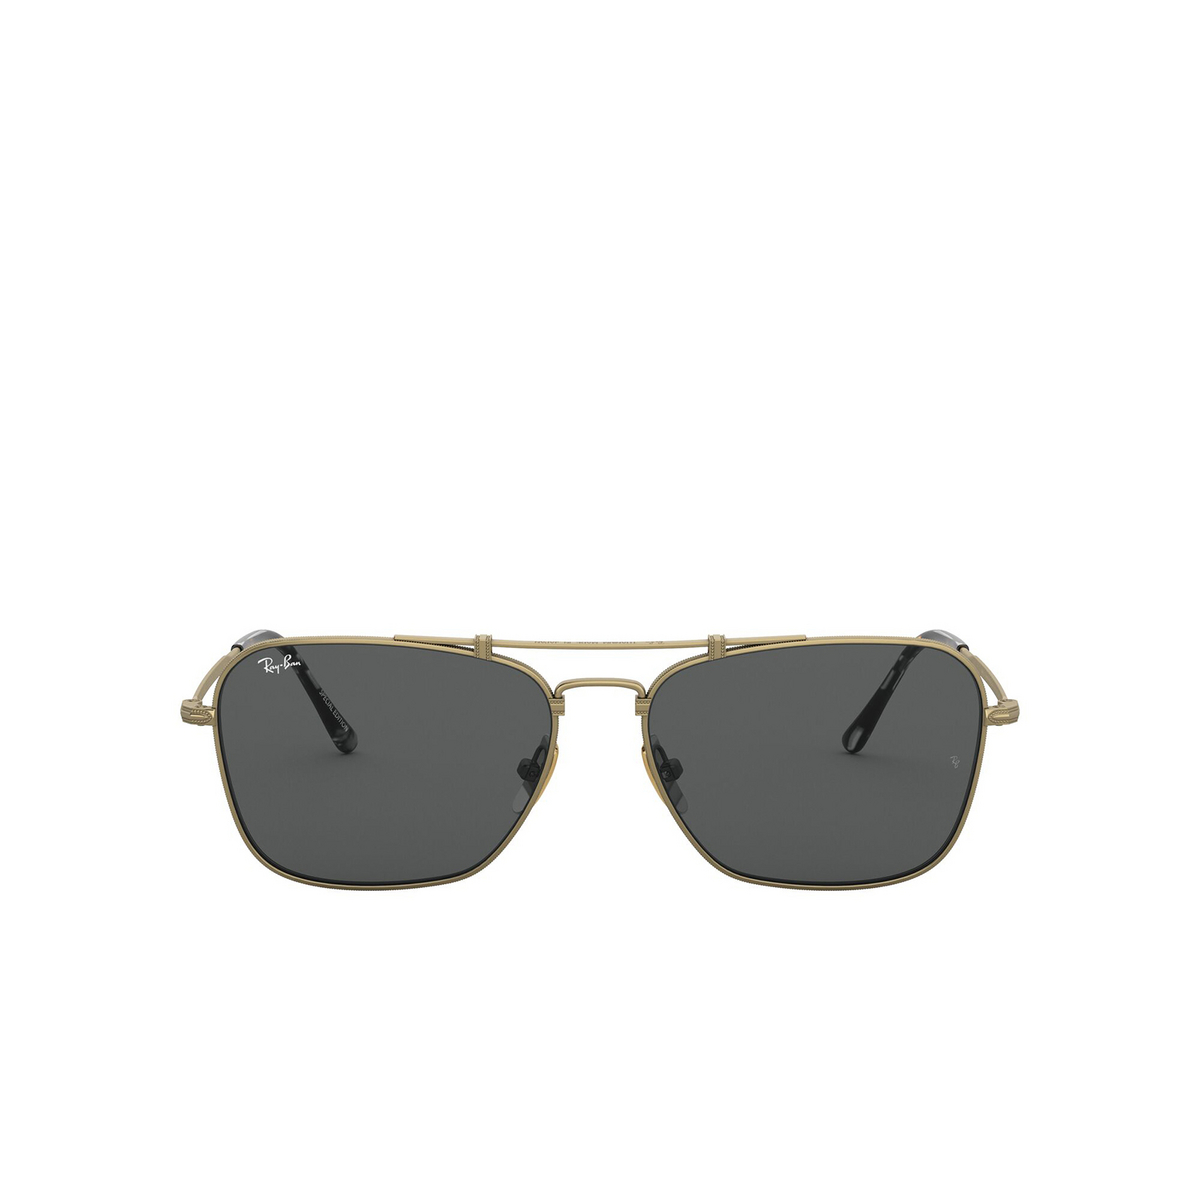 Ray-Ban® Square Sunglasses: Titanium RB8136 color Demi Gloss Antique Arista 913757 - front view.